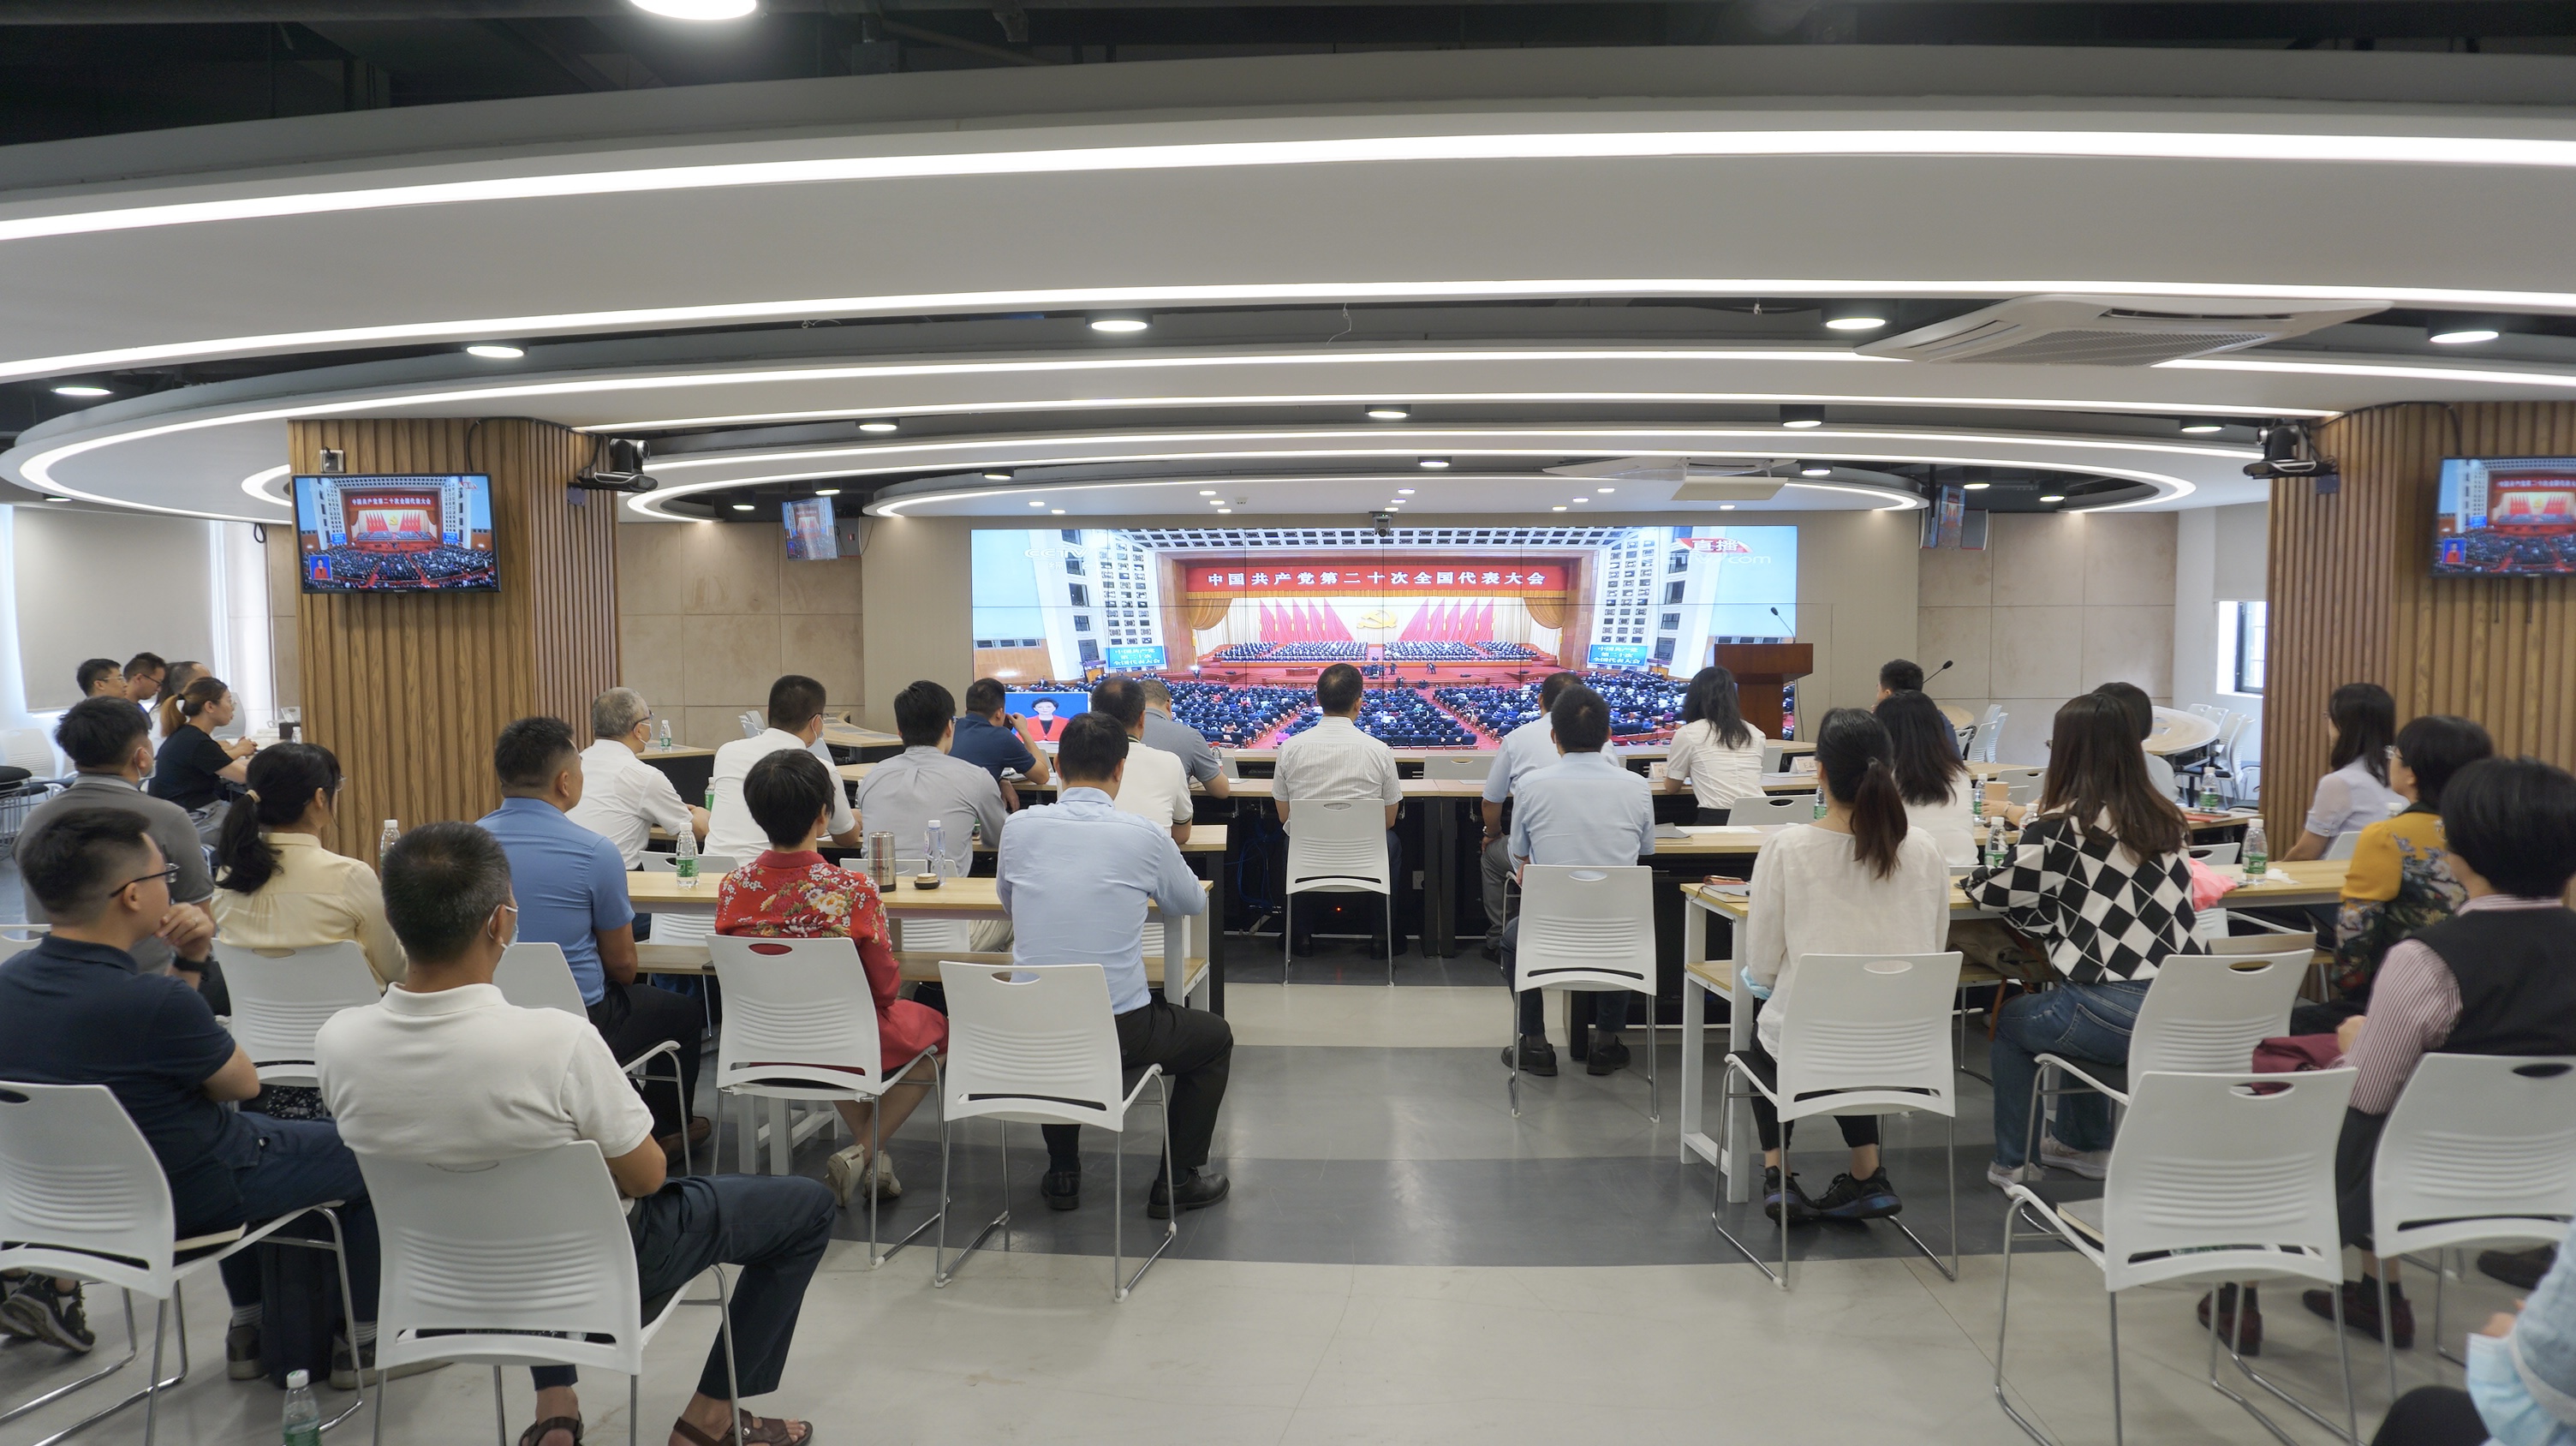 yobo体育
党员干部收听收看中国共产党第二十次全国代表大会开幕会